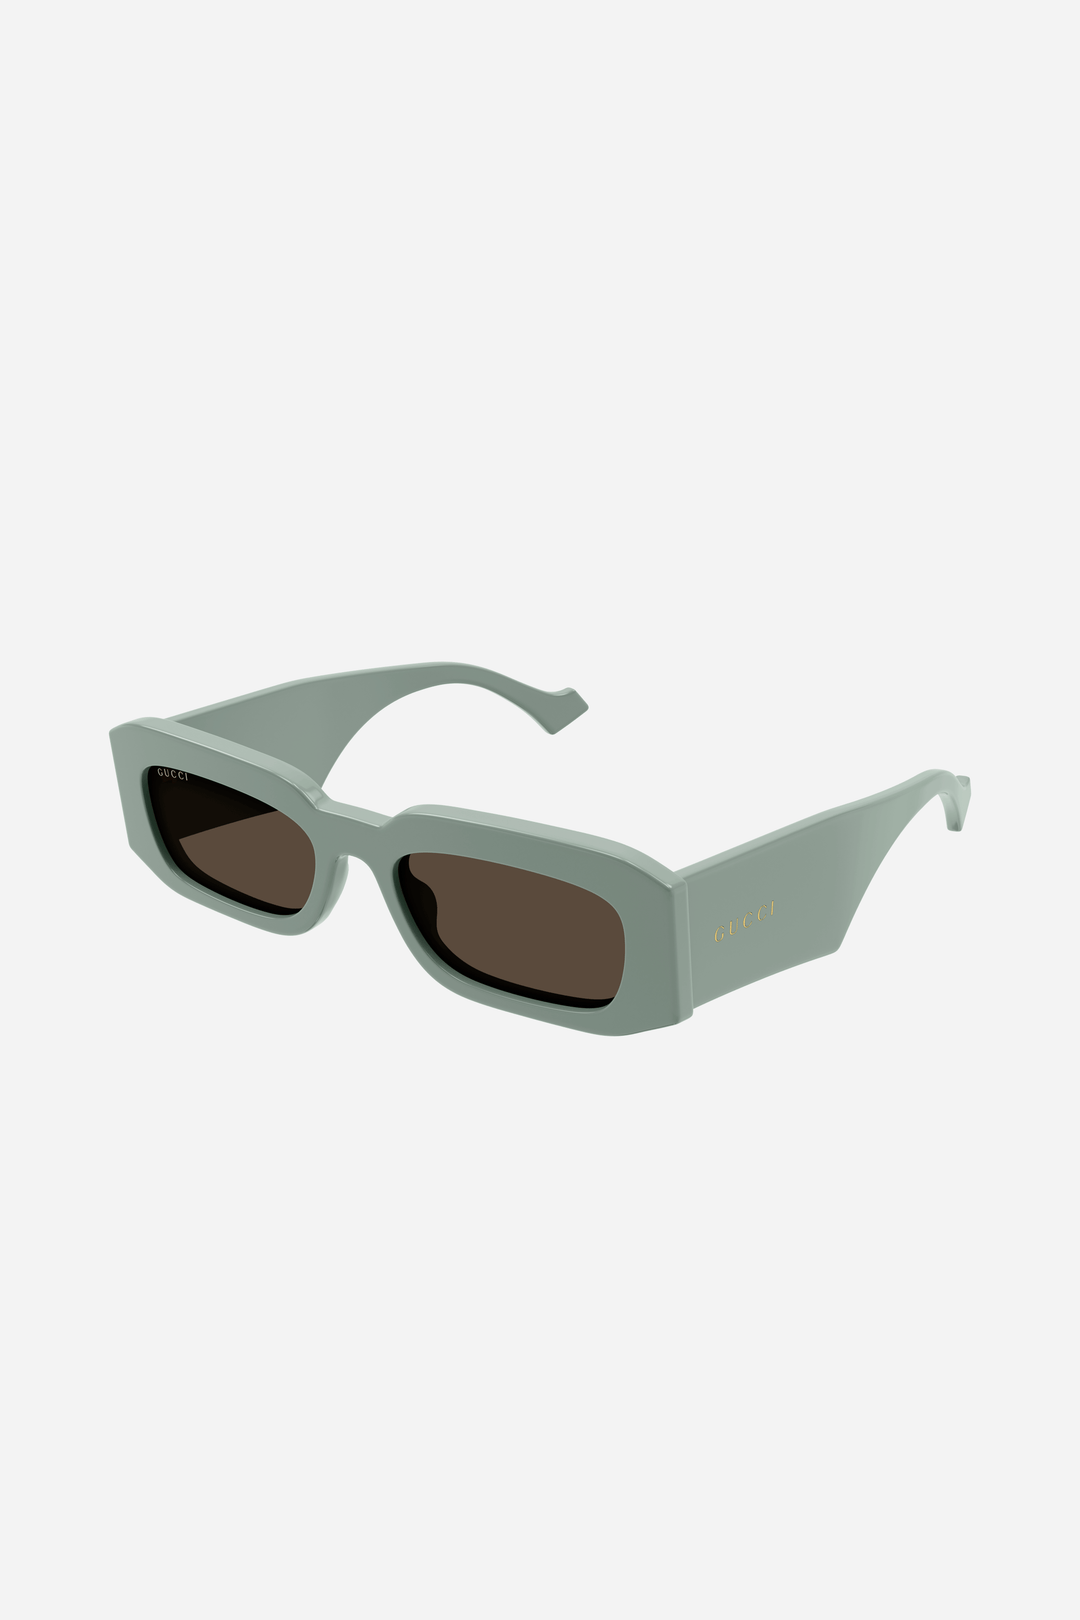 Gucci chuncky green sunglasses - Eyewear Club